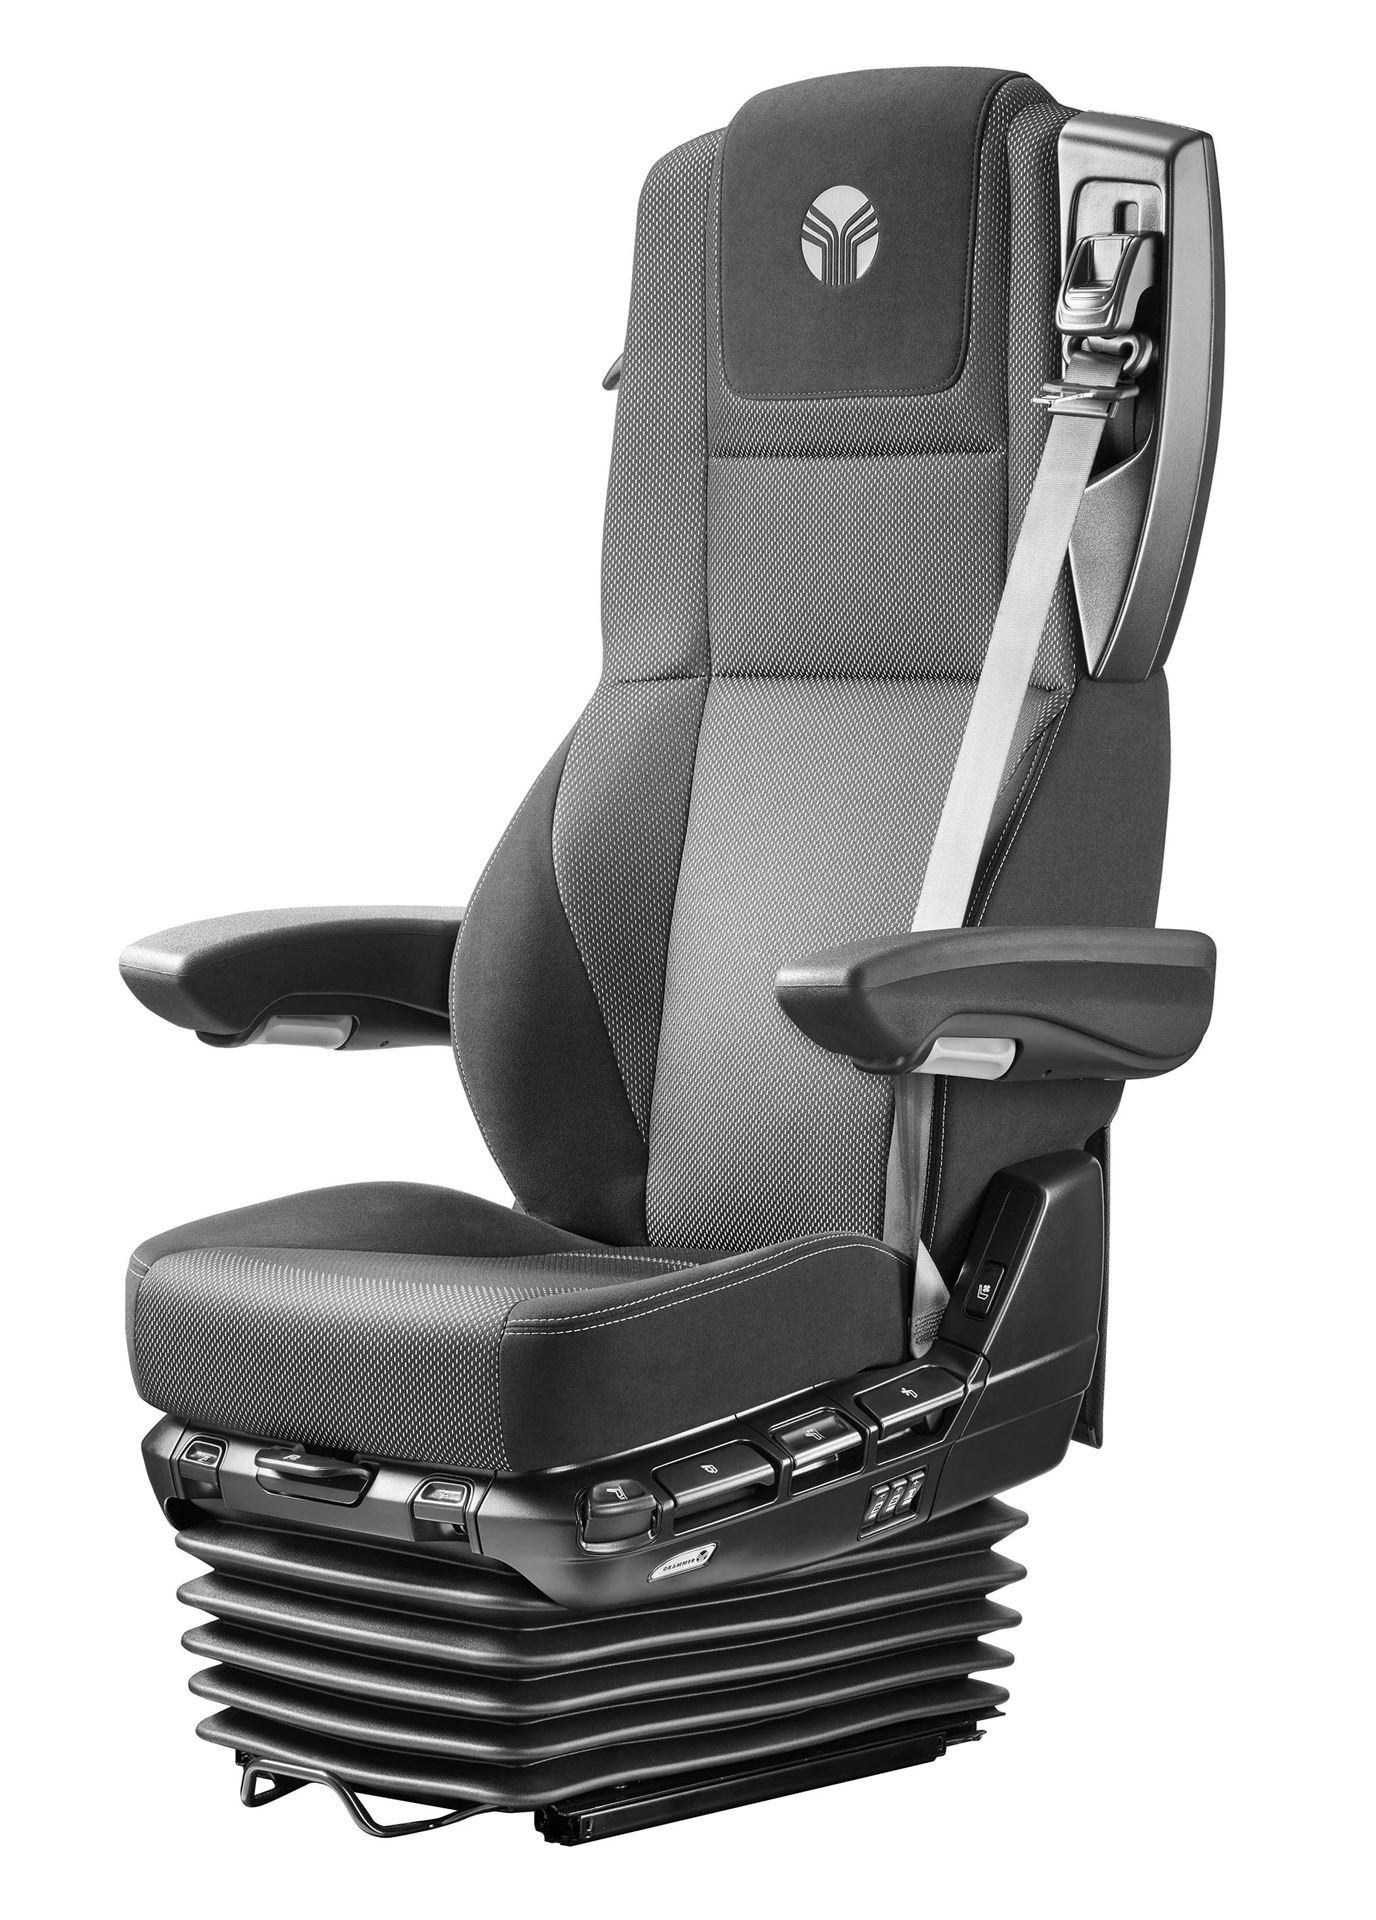 Grammer ROADTIGER Comfort Seat. Grammer Seating UK